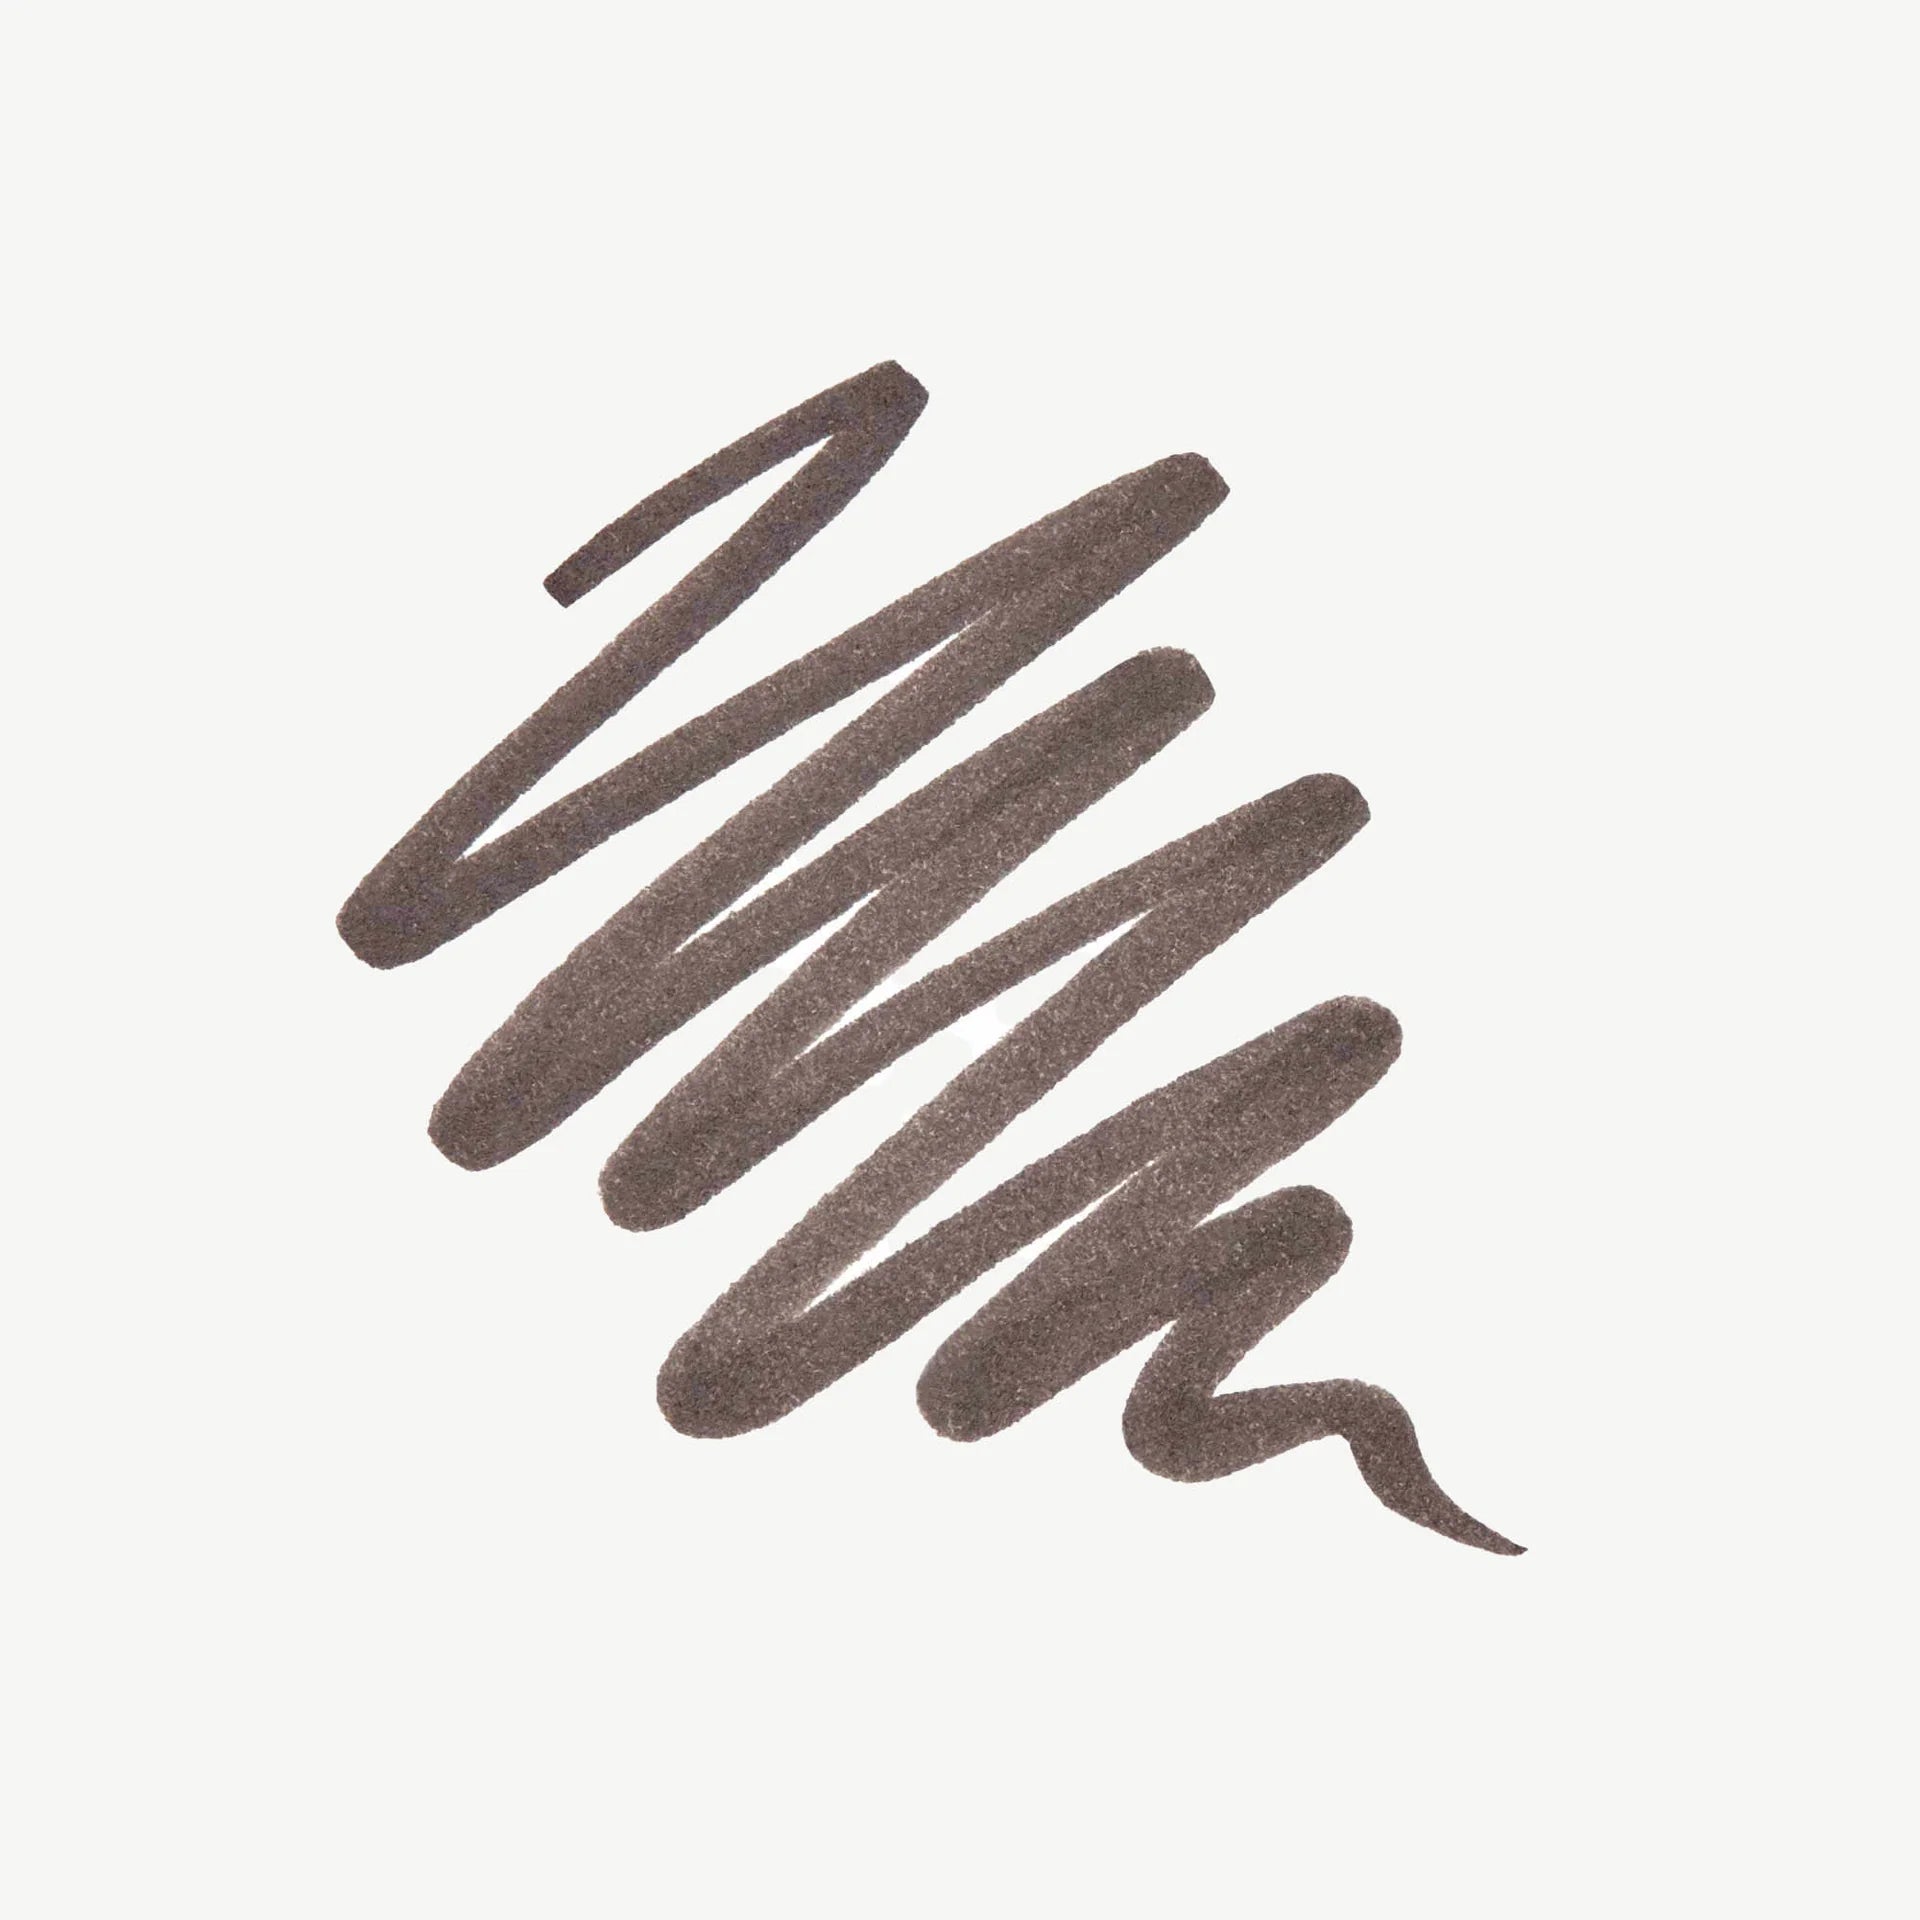 Medium Brown |Brow Pen Swatch Shade Medium Brown